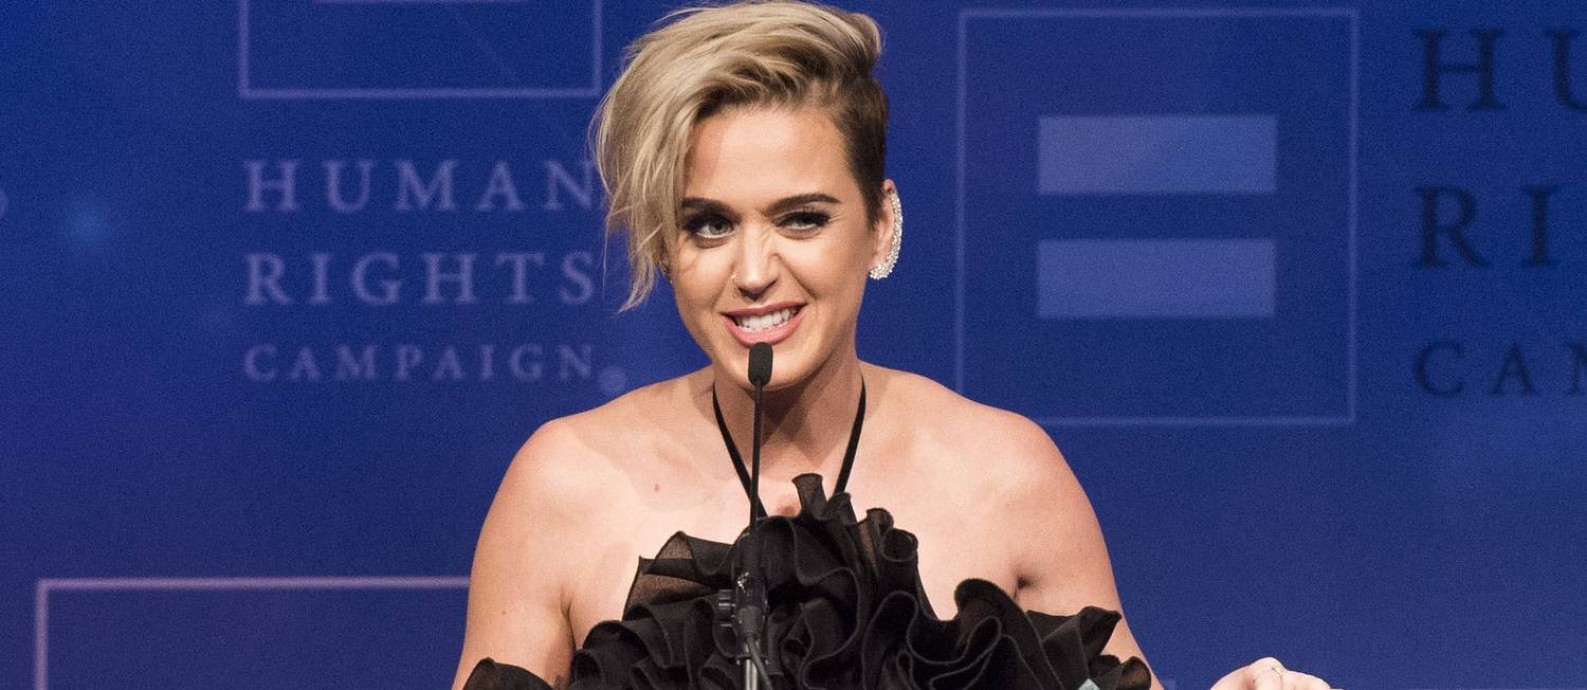 Katy Perry agradece o prêmio da comunidade LGBTQ Foto: VALERIE MACON / AFP